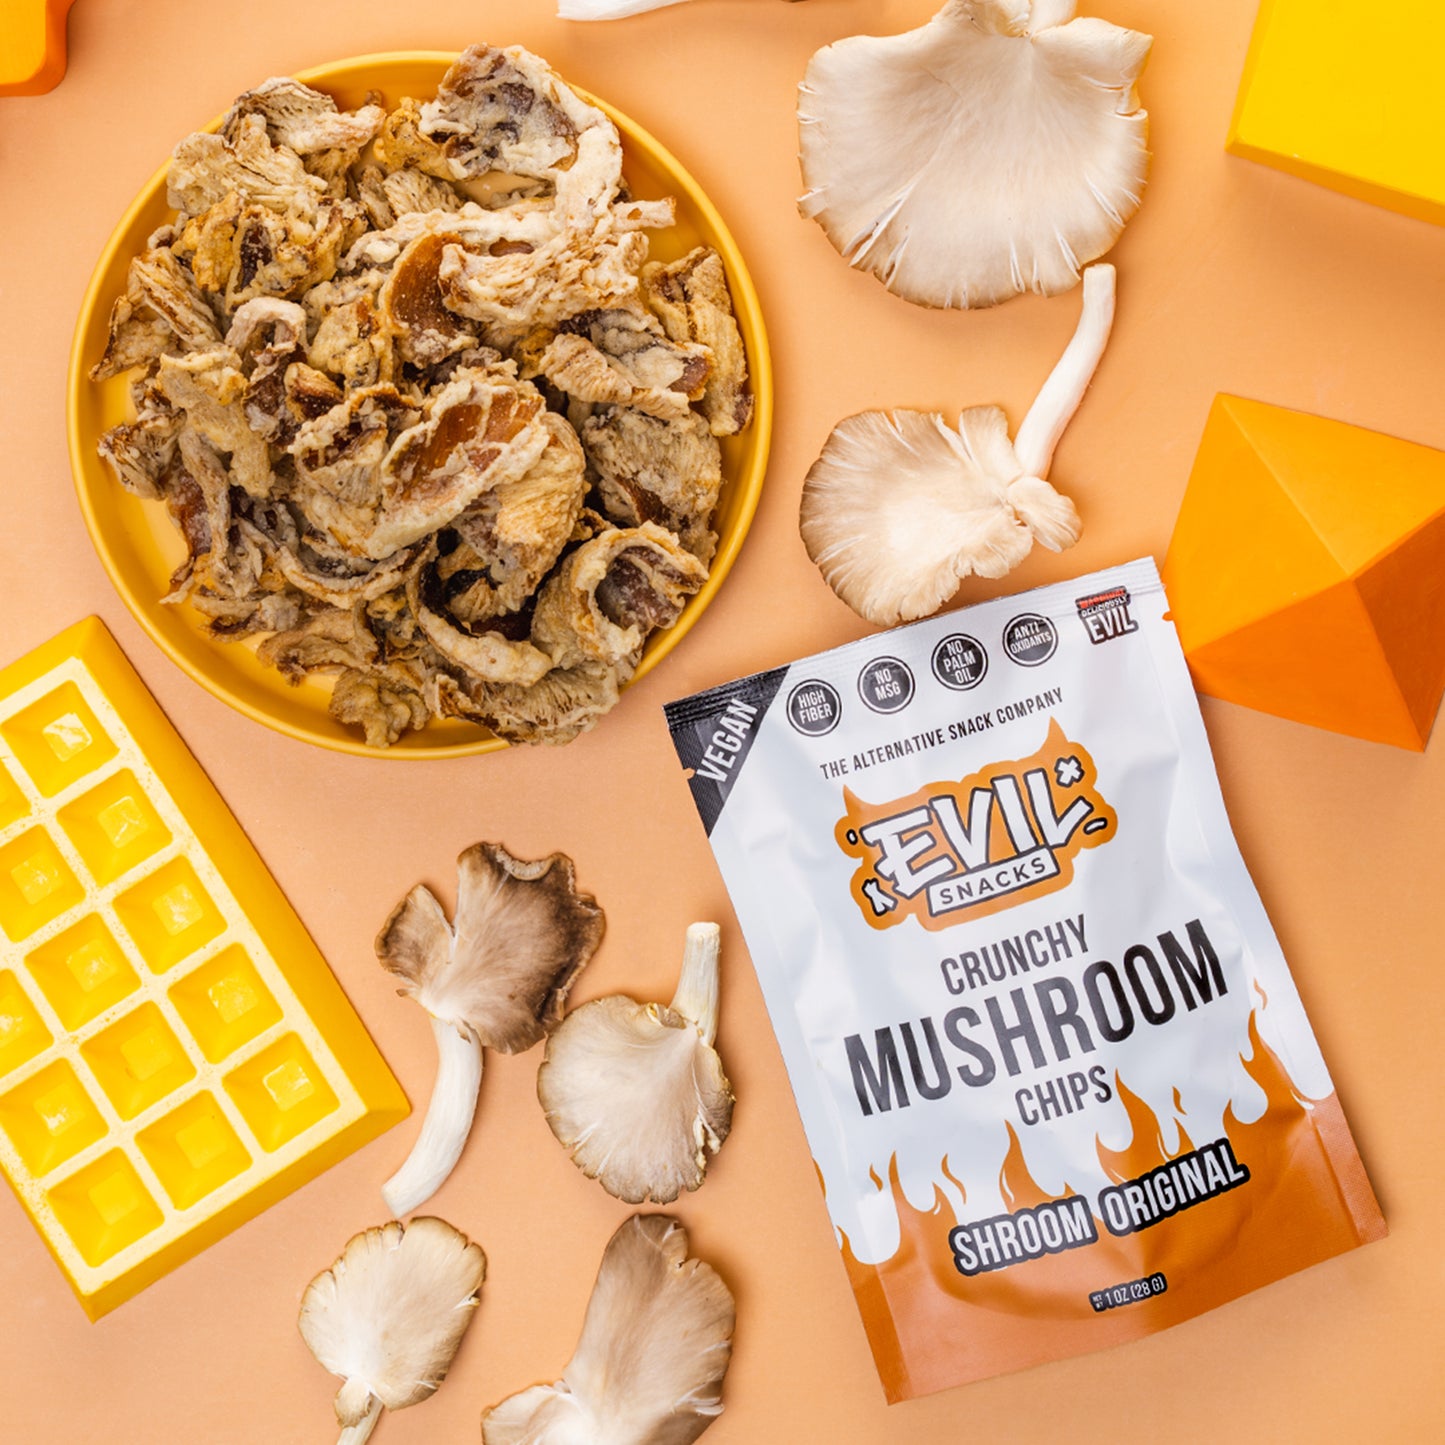 Crunchy Mushroom Chips - Original Flavor